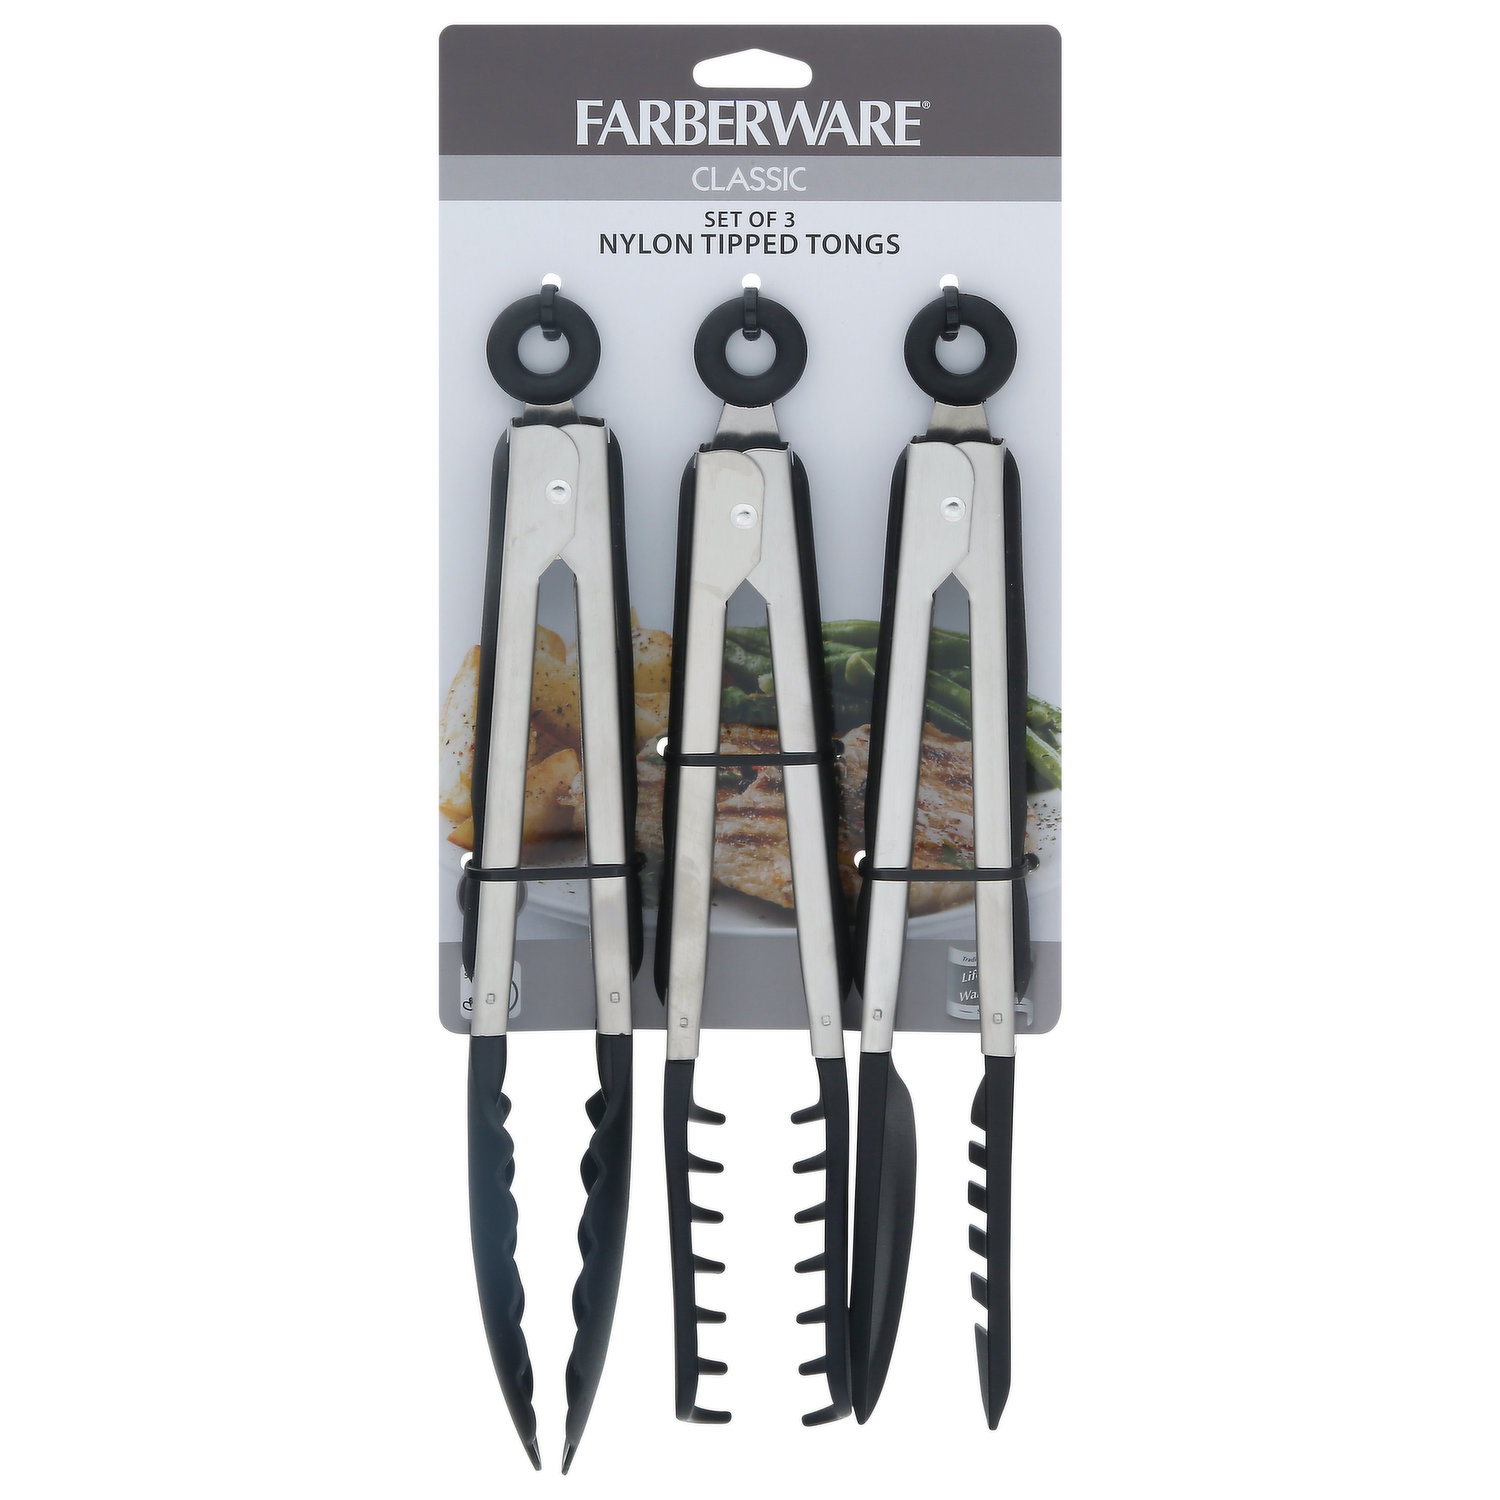 Farberware - French Press – Farberware Goods